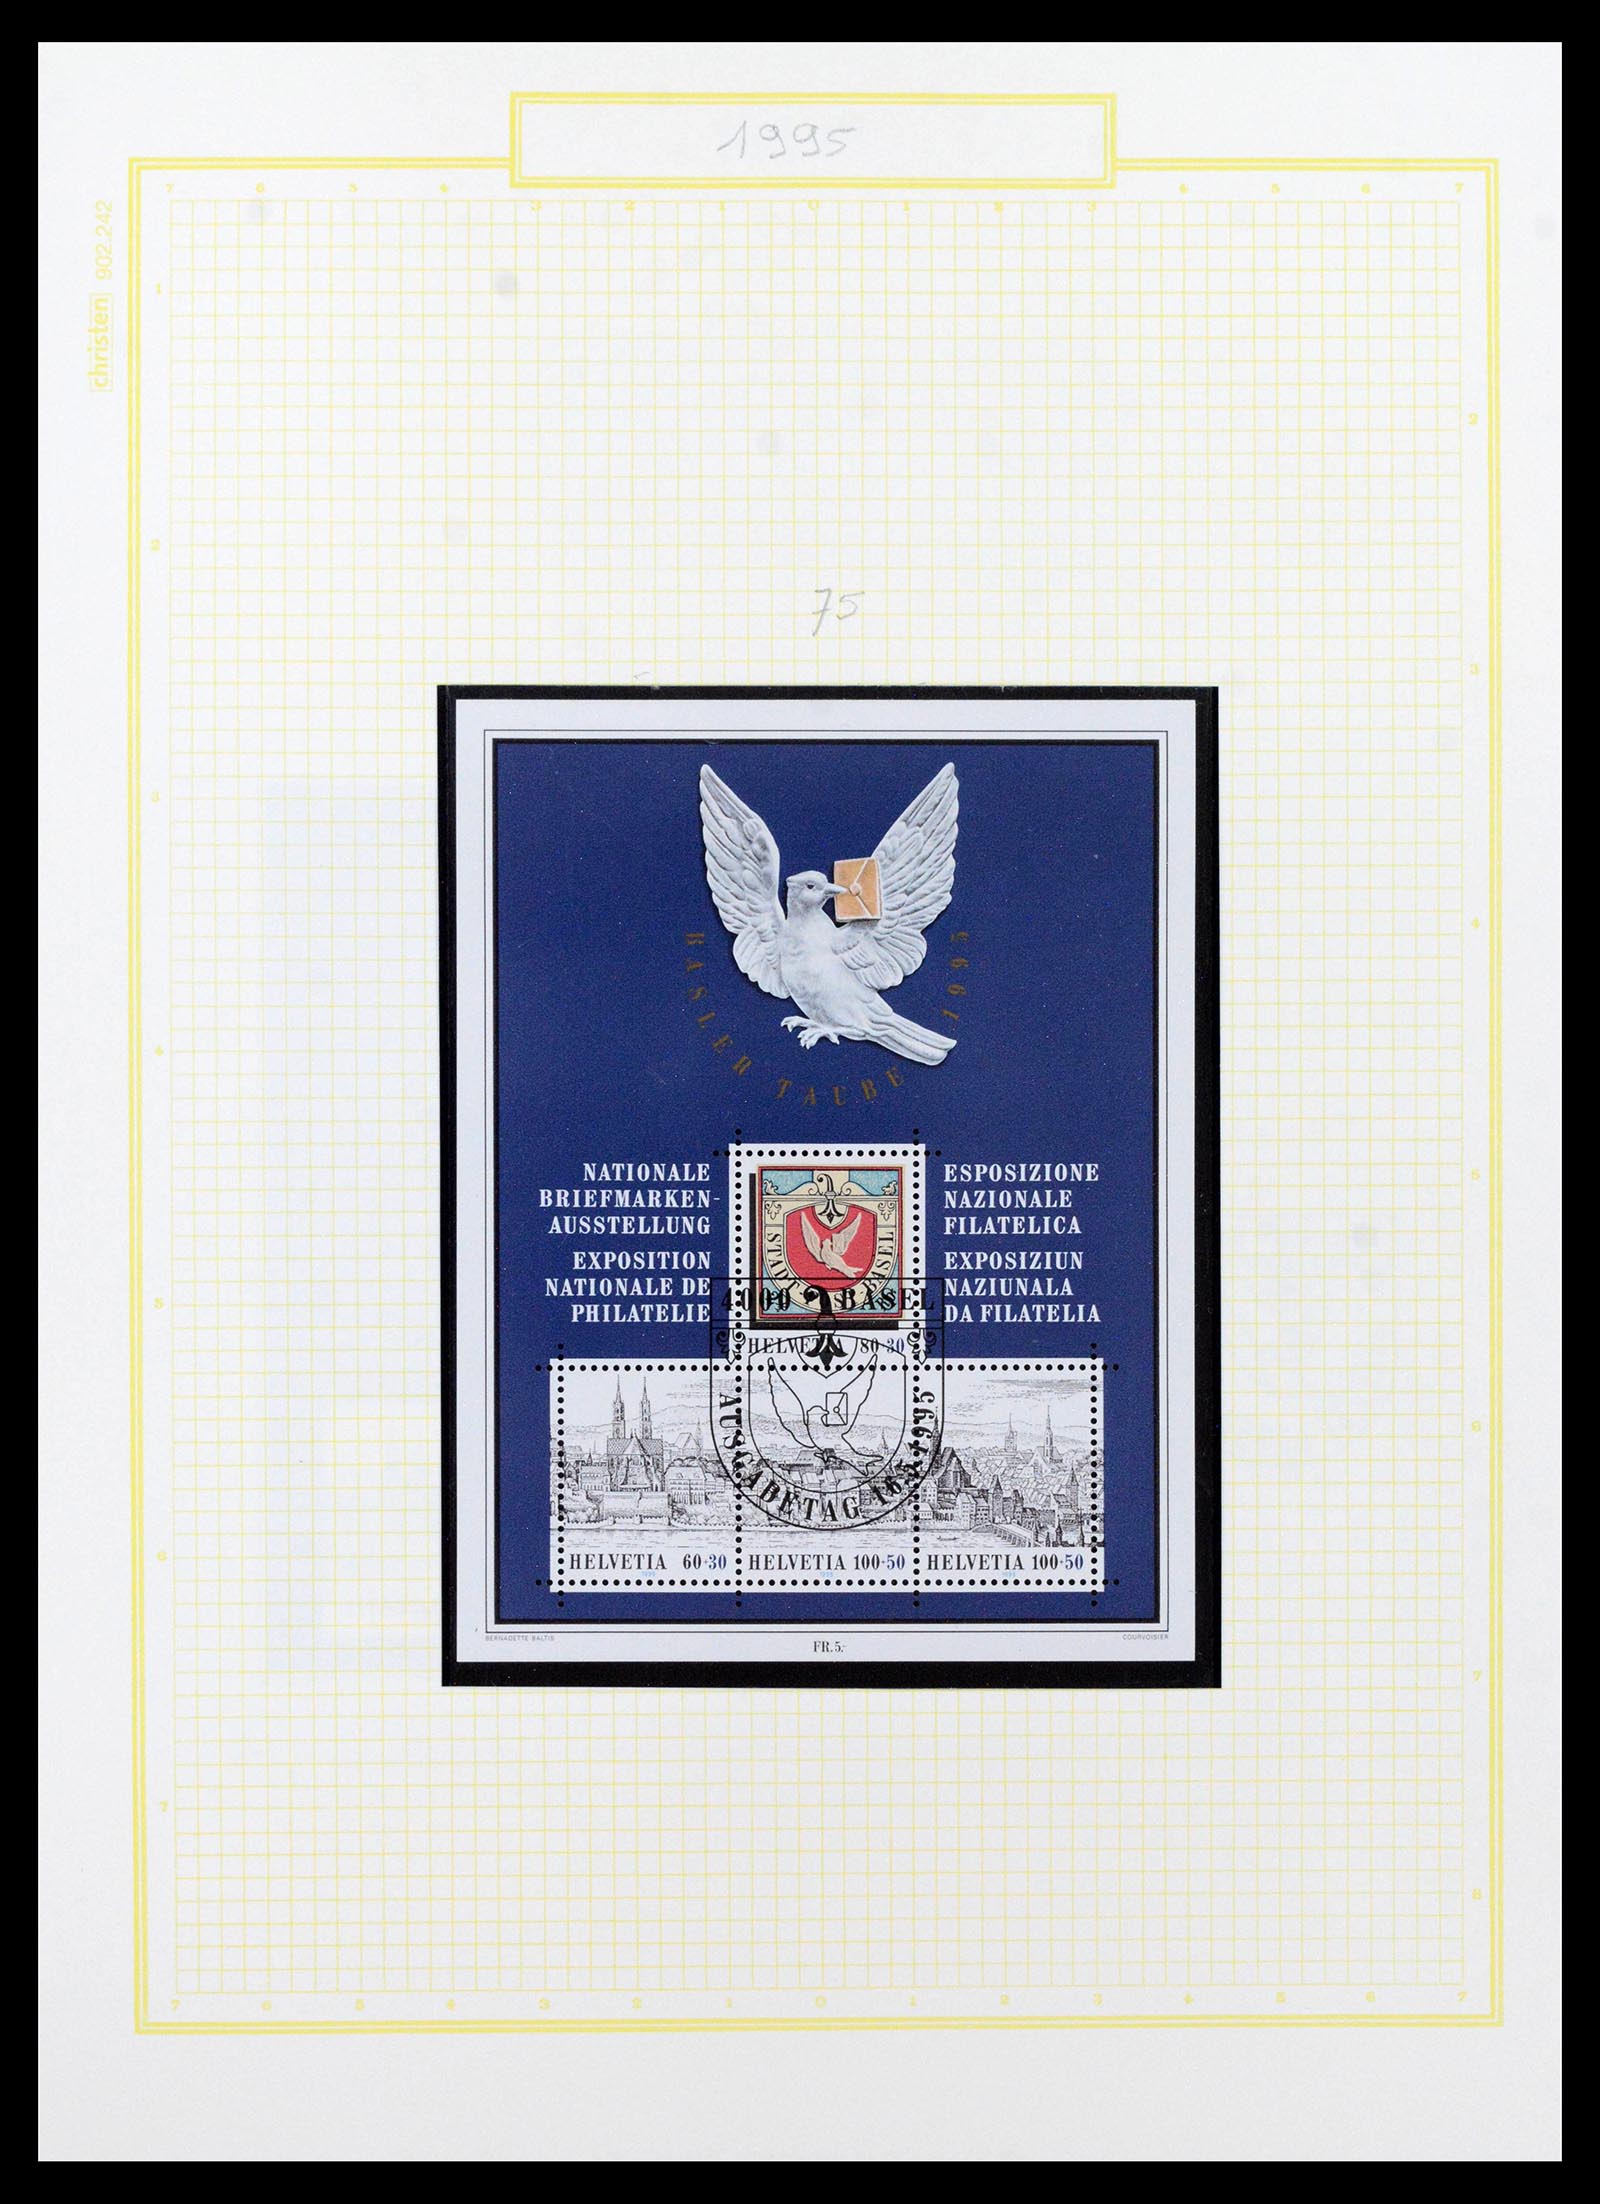 39103 0033 - Stamp collection 39103 Switzerland 1920-1988.